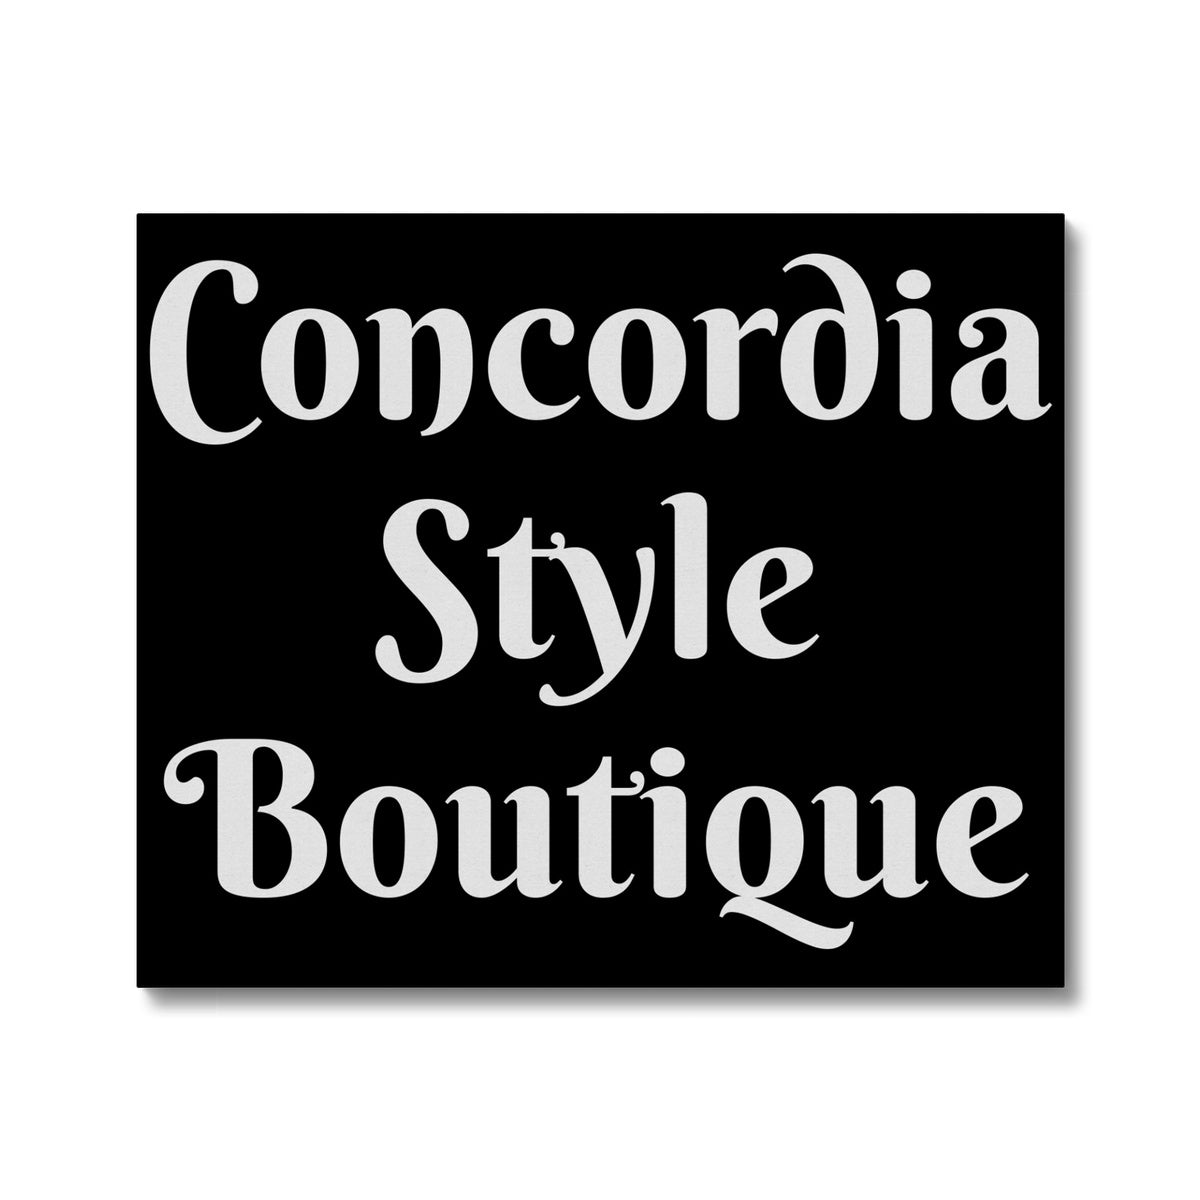 Concordia Style Boutique Canvas